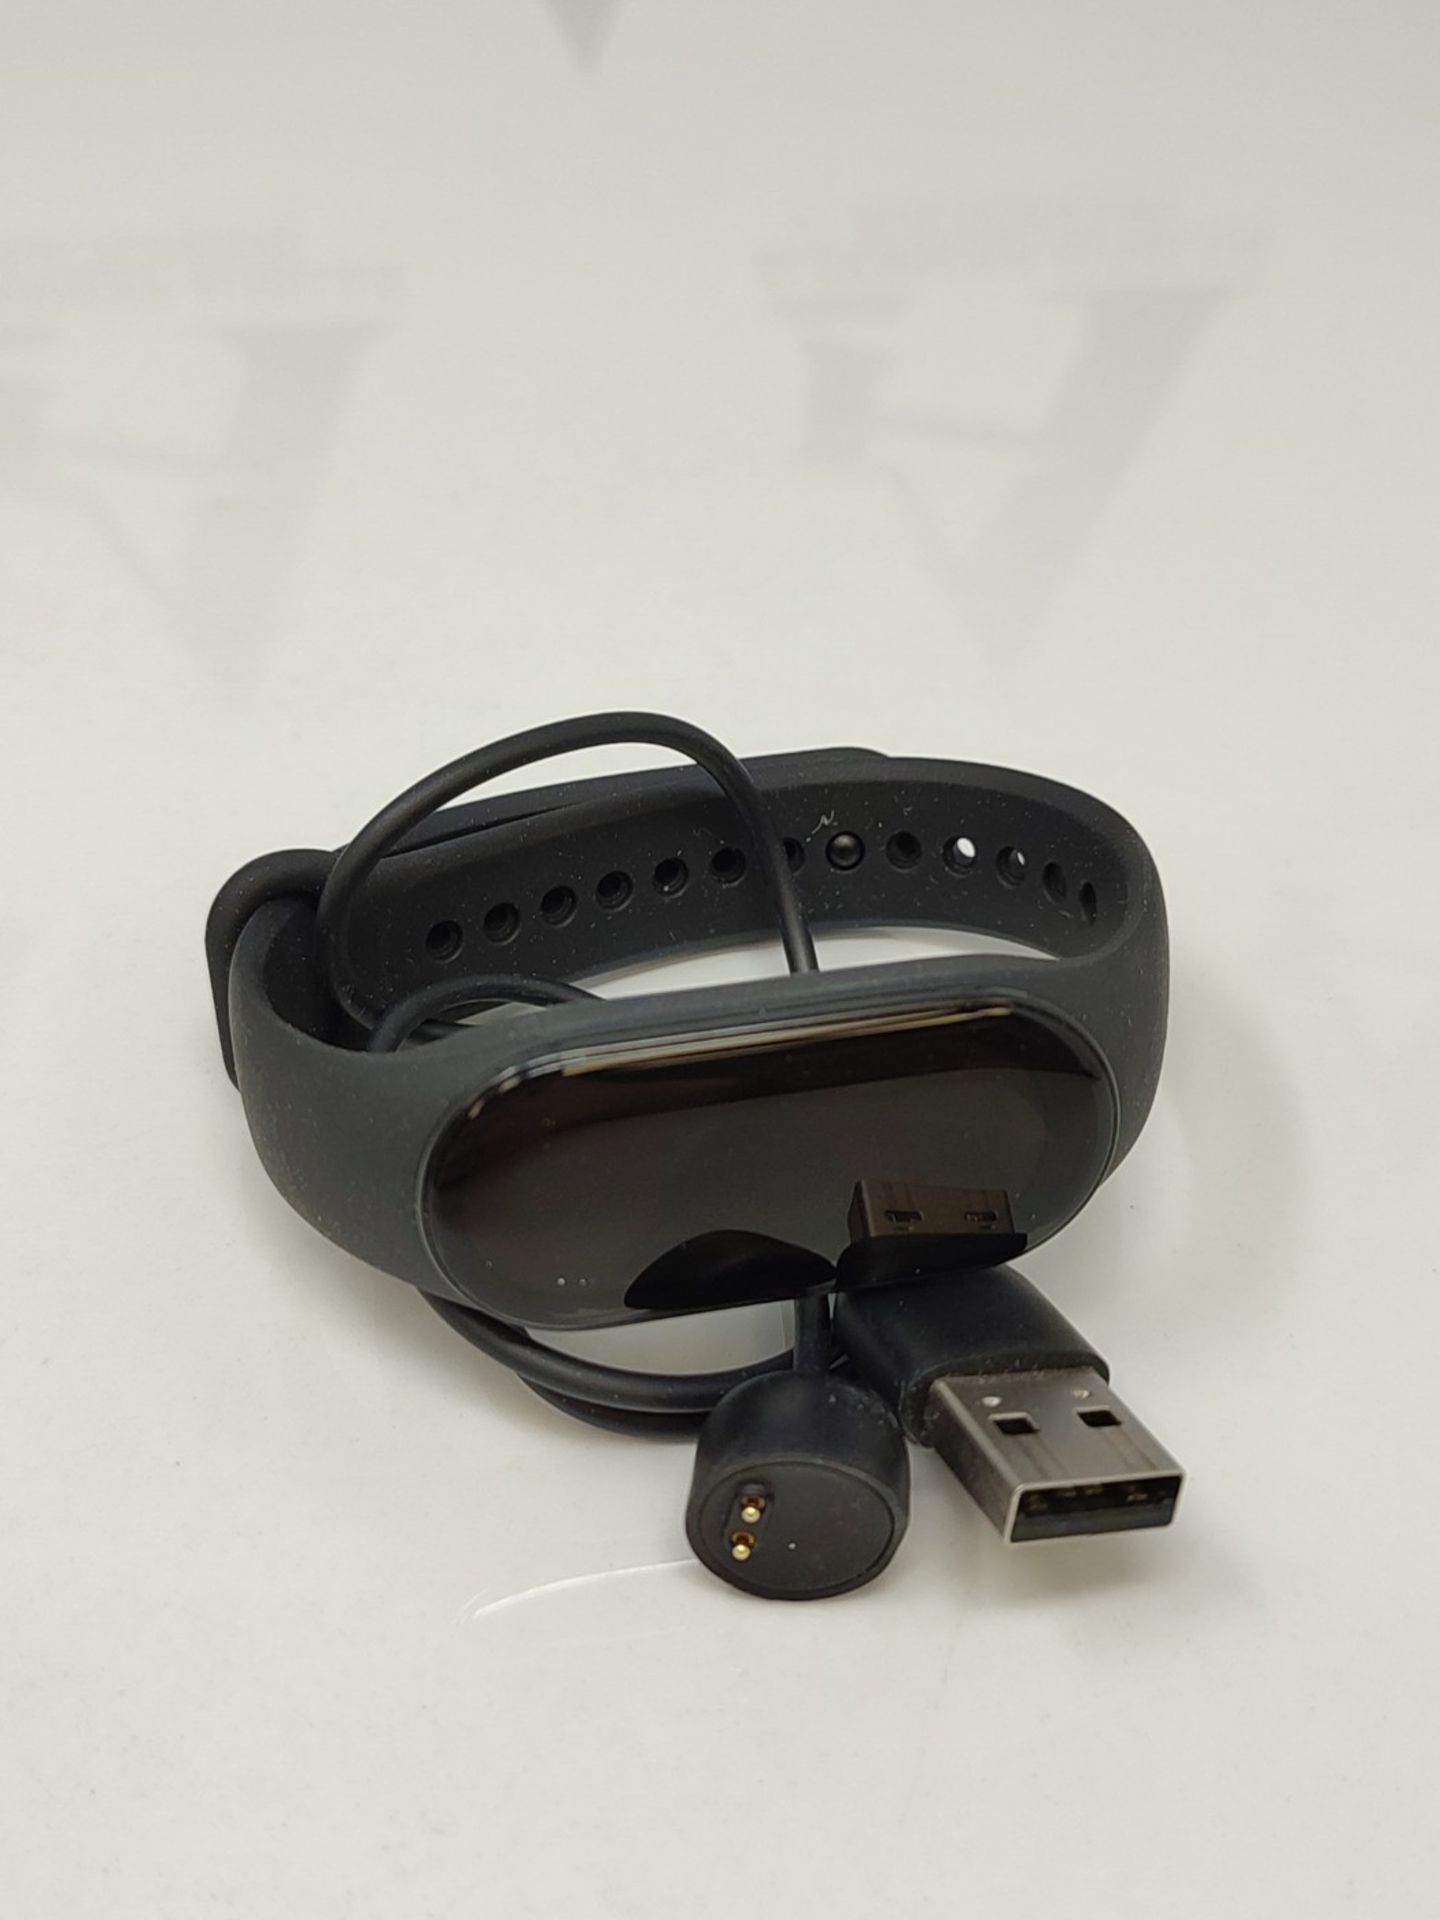 Xiaomi Mi Smart Band 7 Fitness wristband, waterproof 5 ATM, heart rate monitoring, AMO - Image 2 of 2